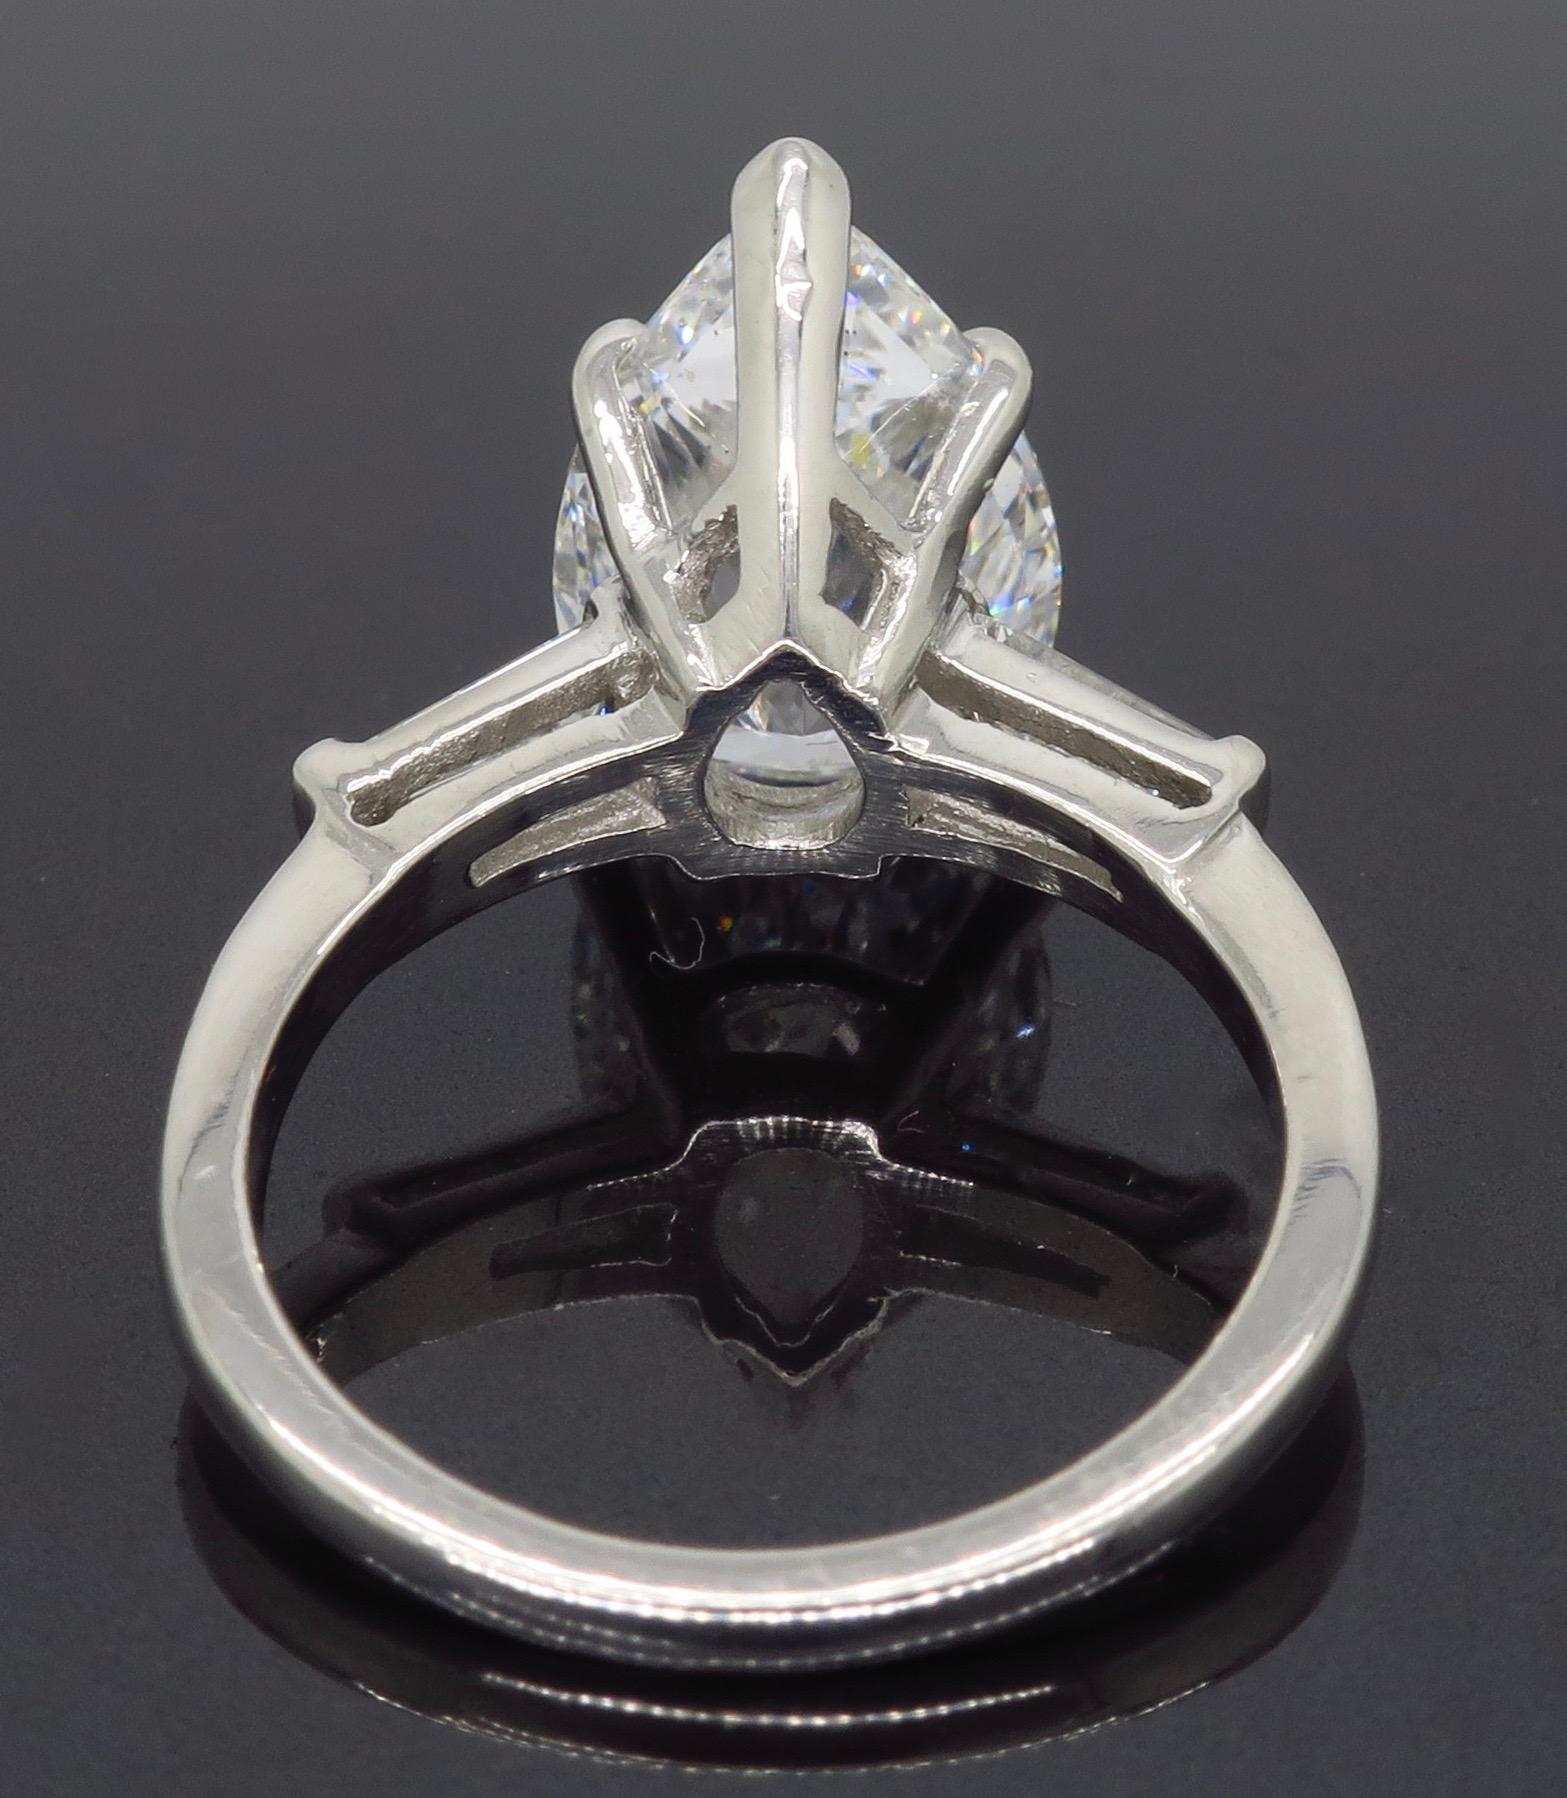 Women's or Men's GIA Certified 4.83 Carat Pear Shaped Diamond Engagement Ring in Platinum